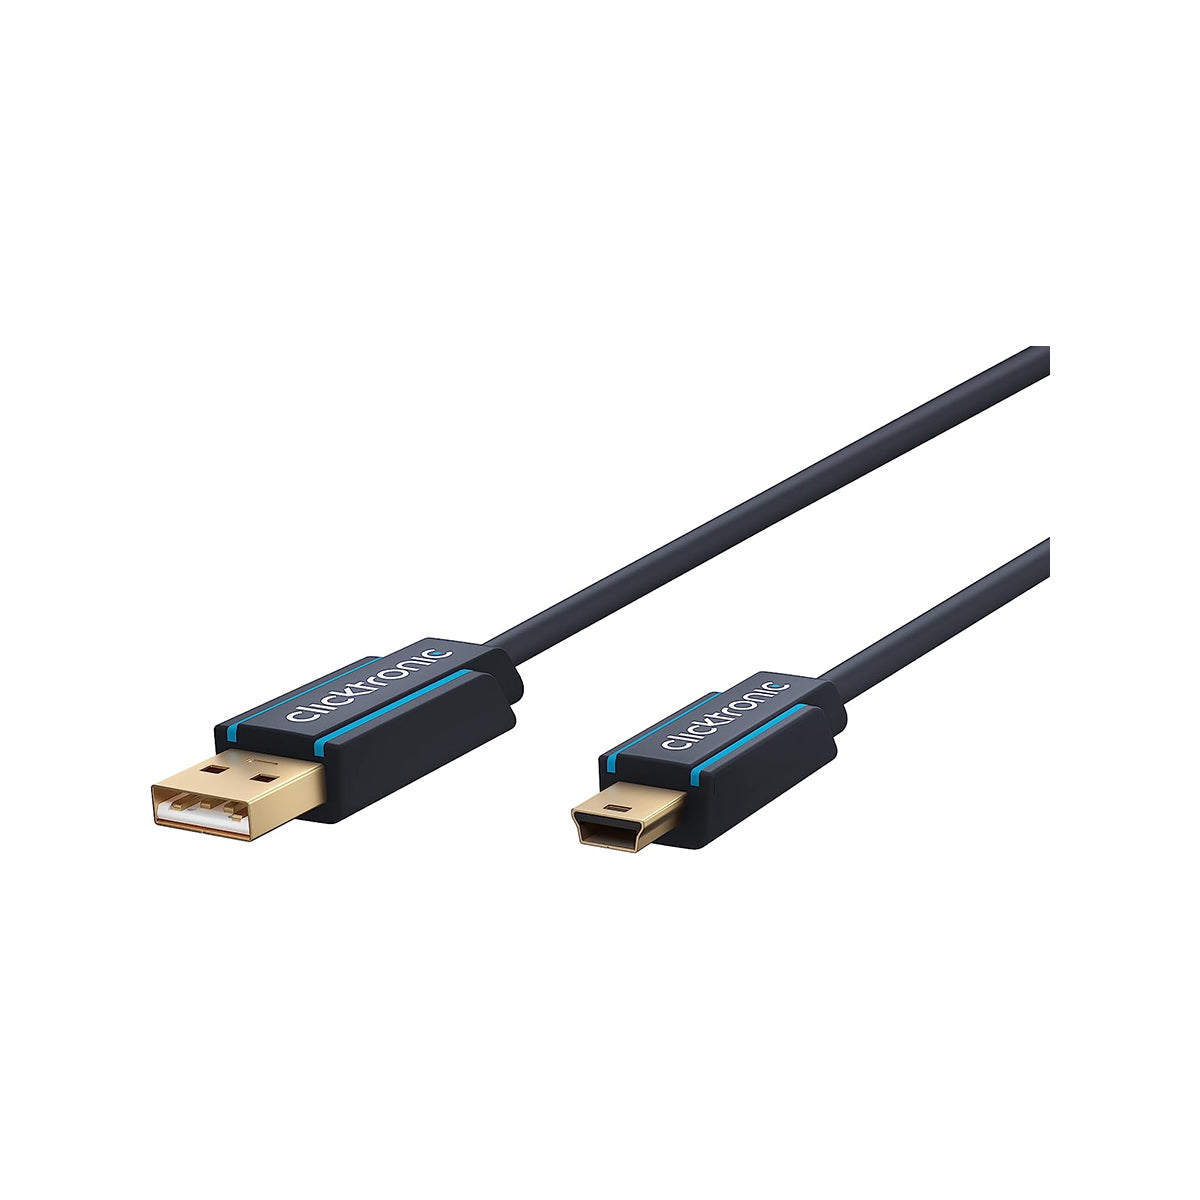 Clicktronic USB A 2.0 to USB MINI-B 5 Cable - 0.5m